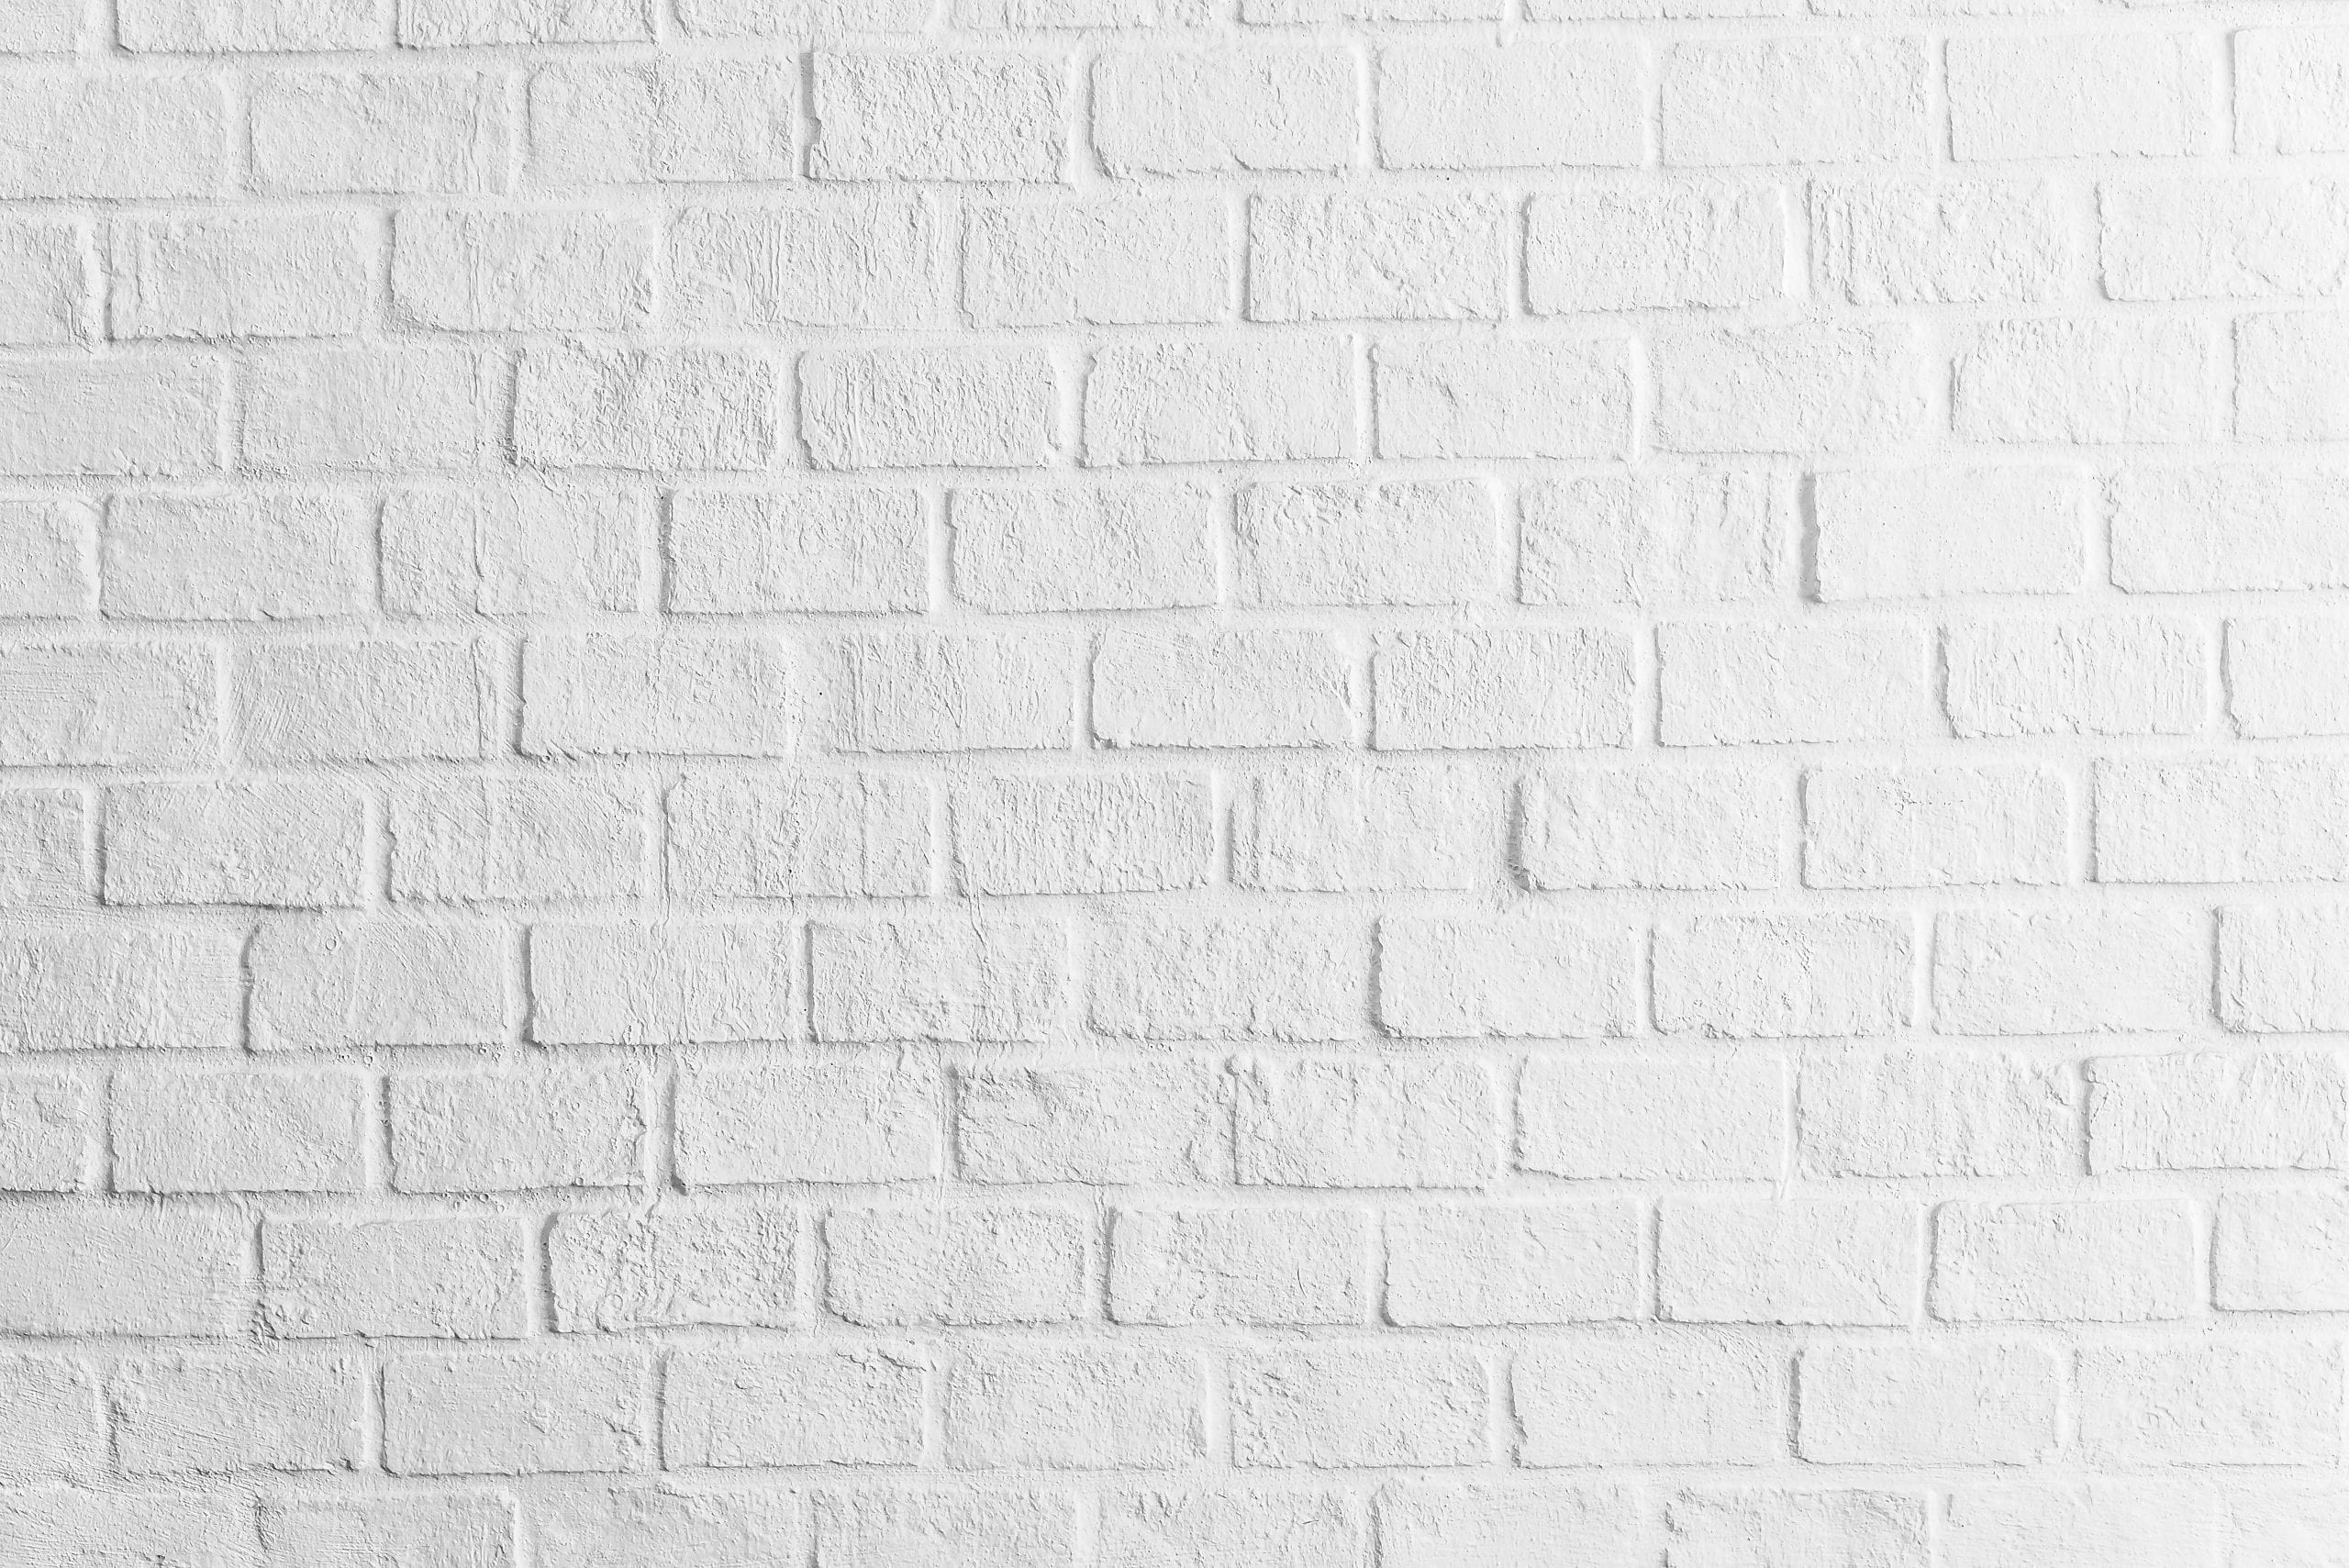 white-brick-wall-textures-background-aim-social-media-marketing